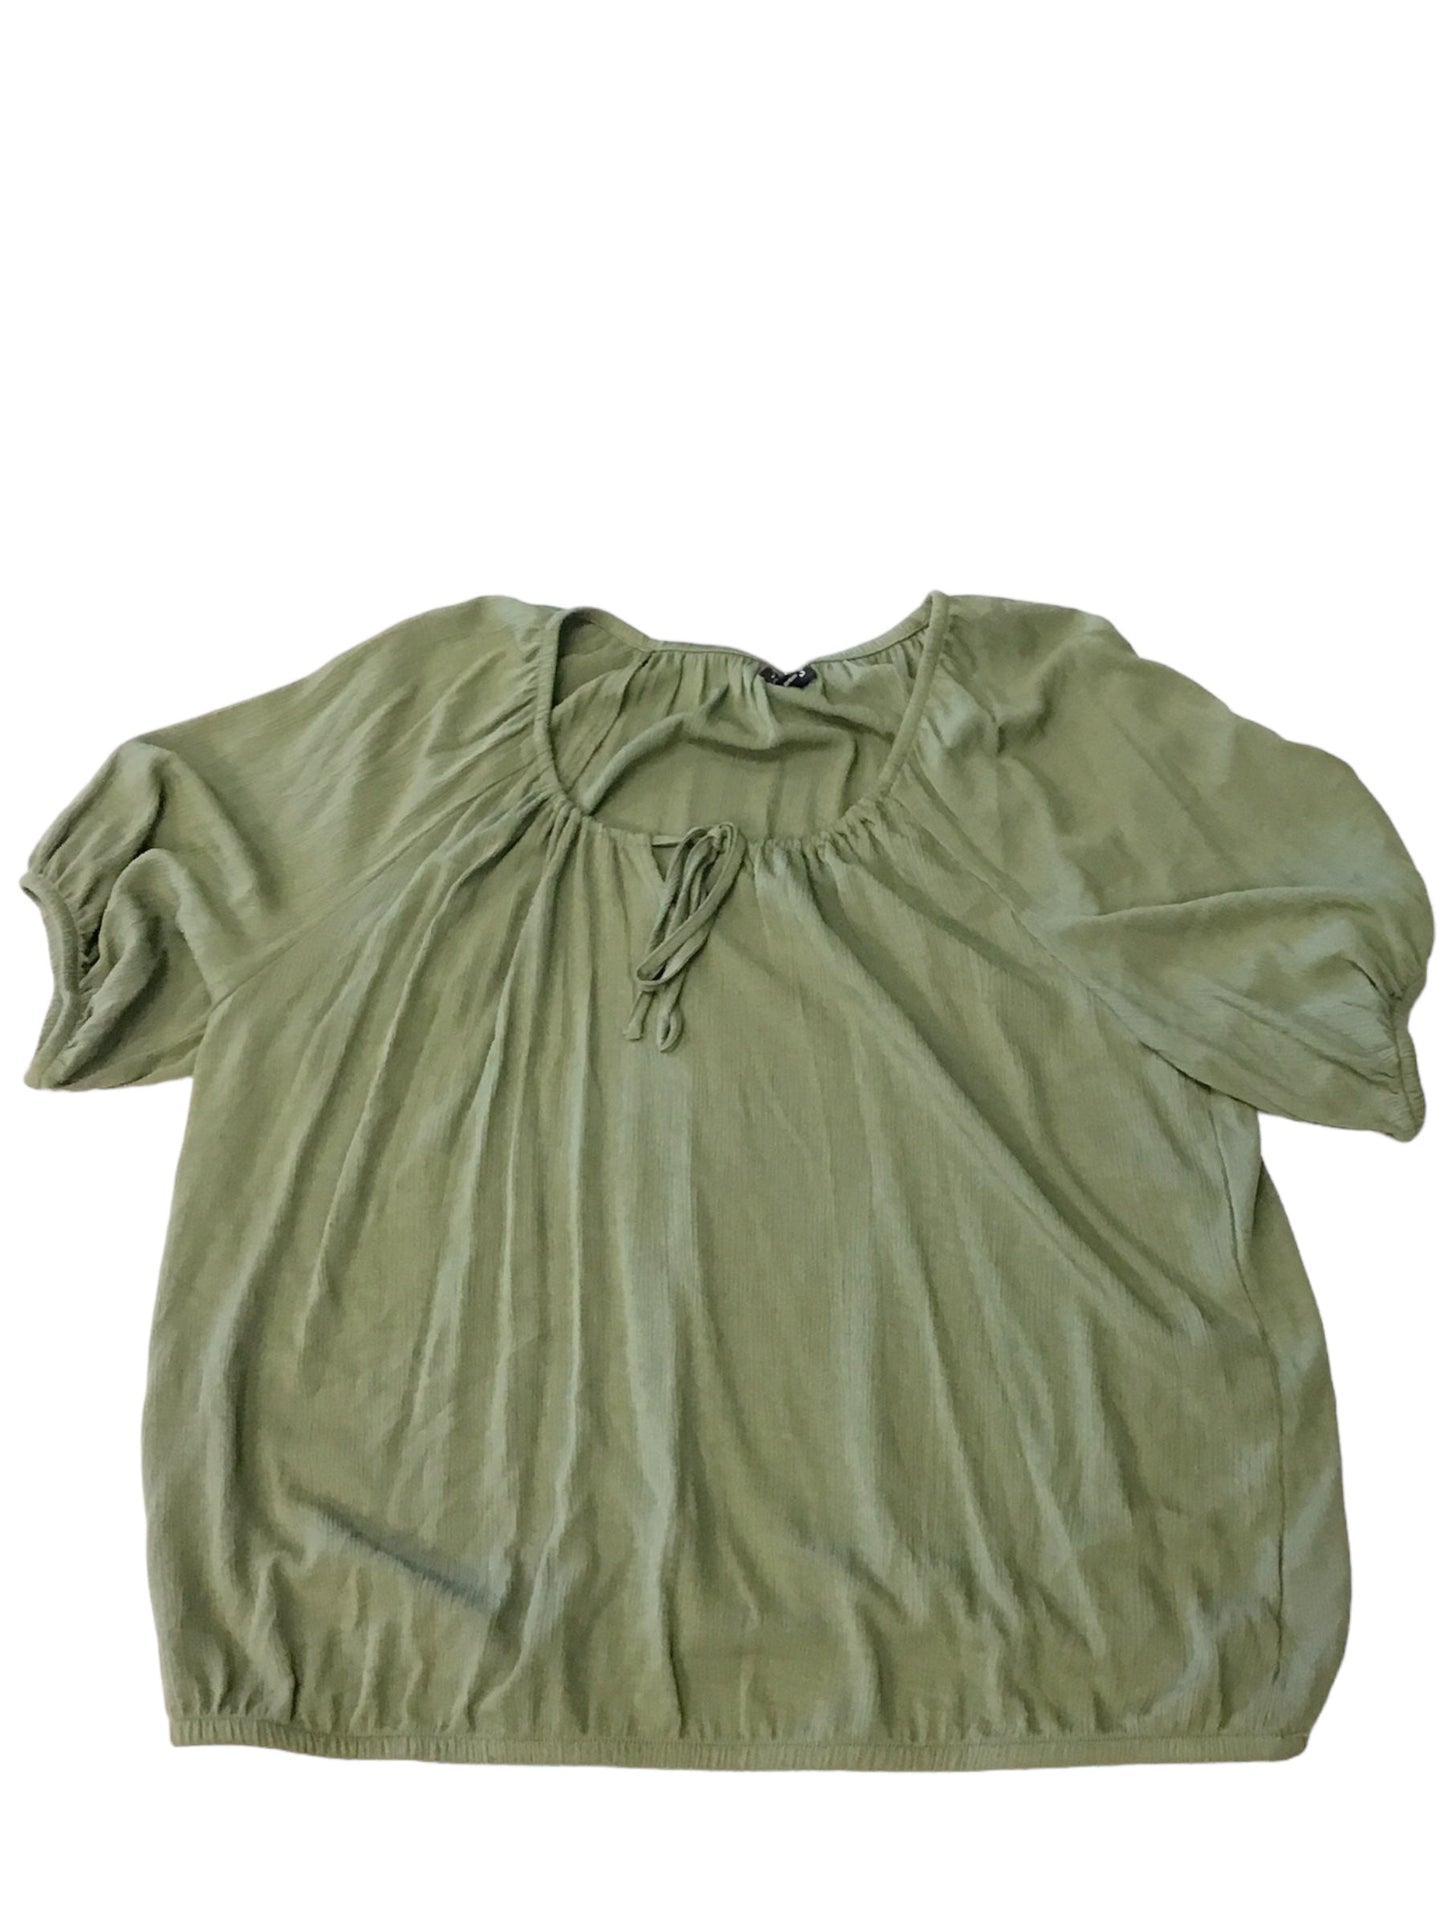 Green Top Short Sleeve Torrid, Size 1x